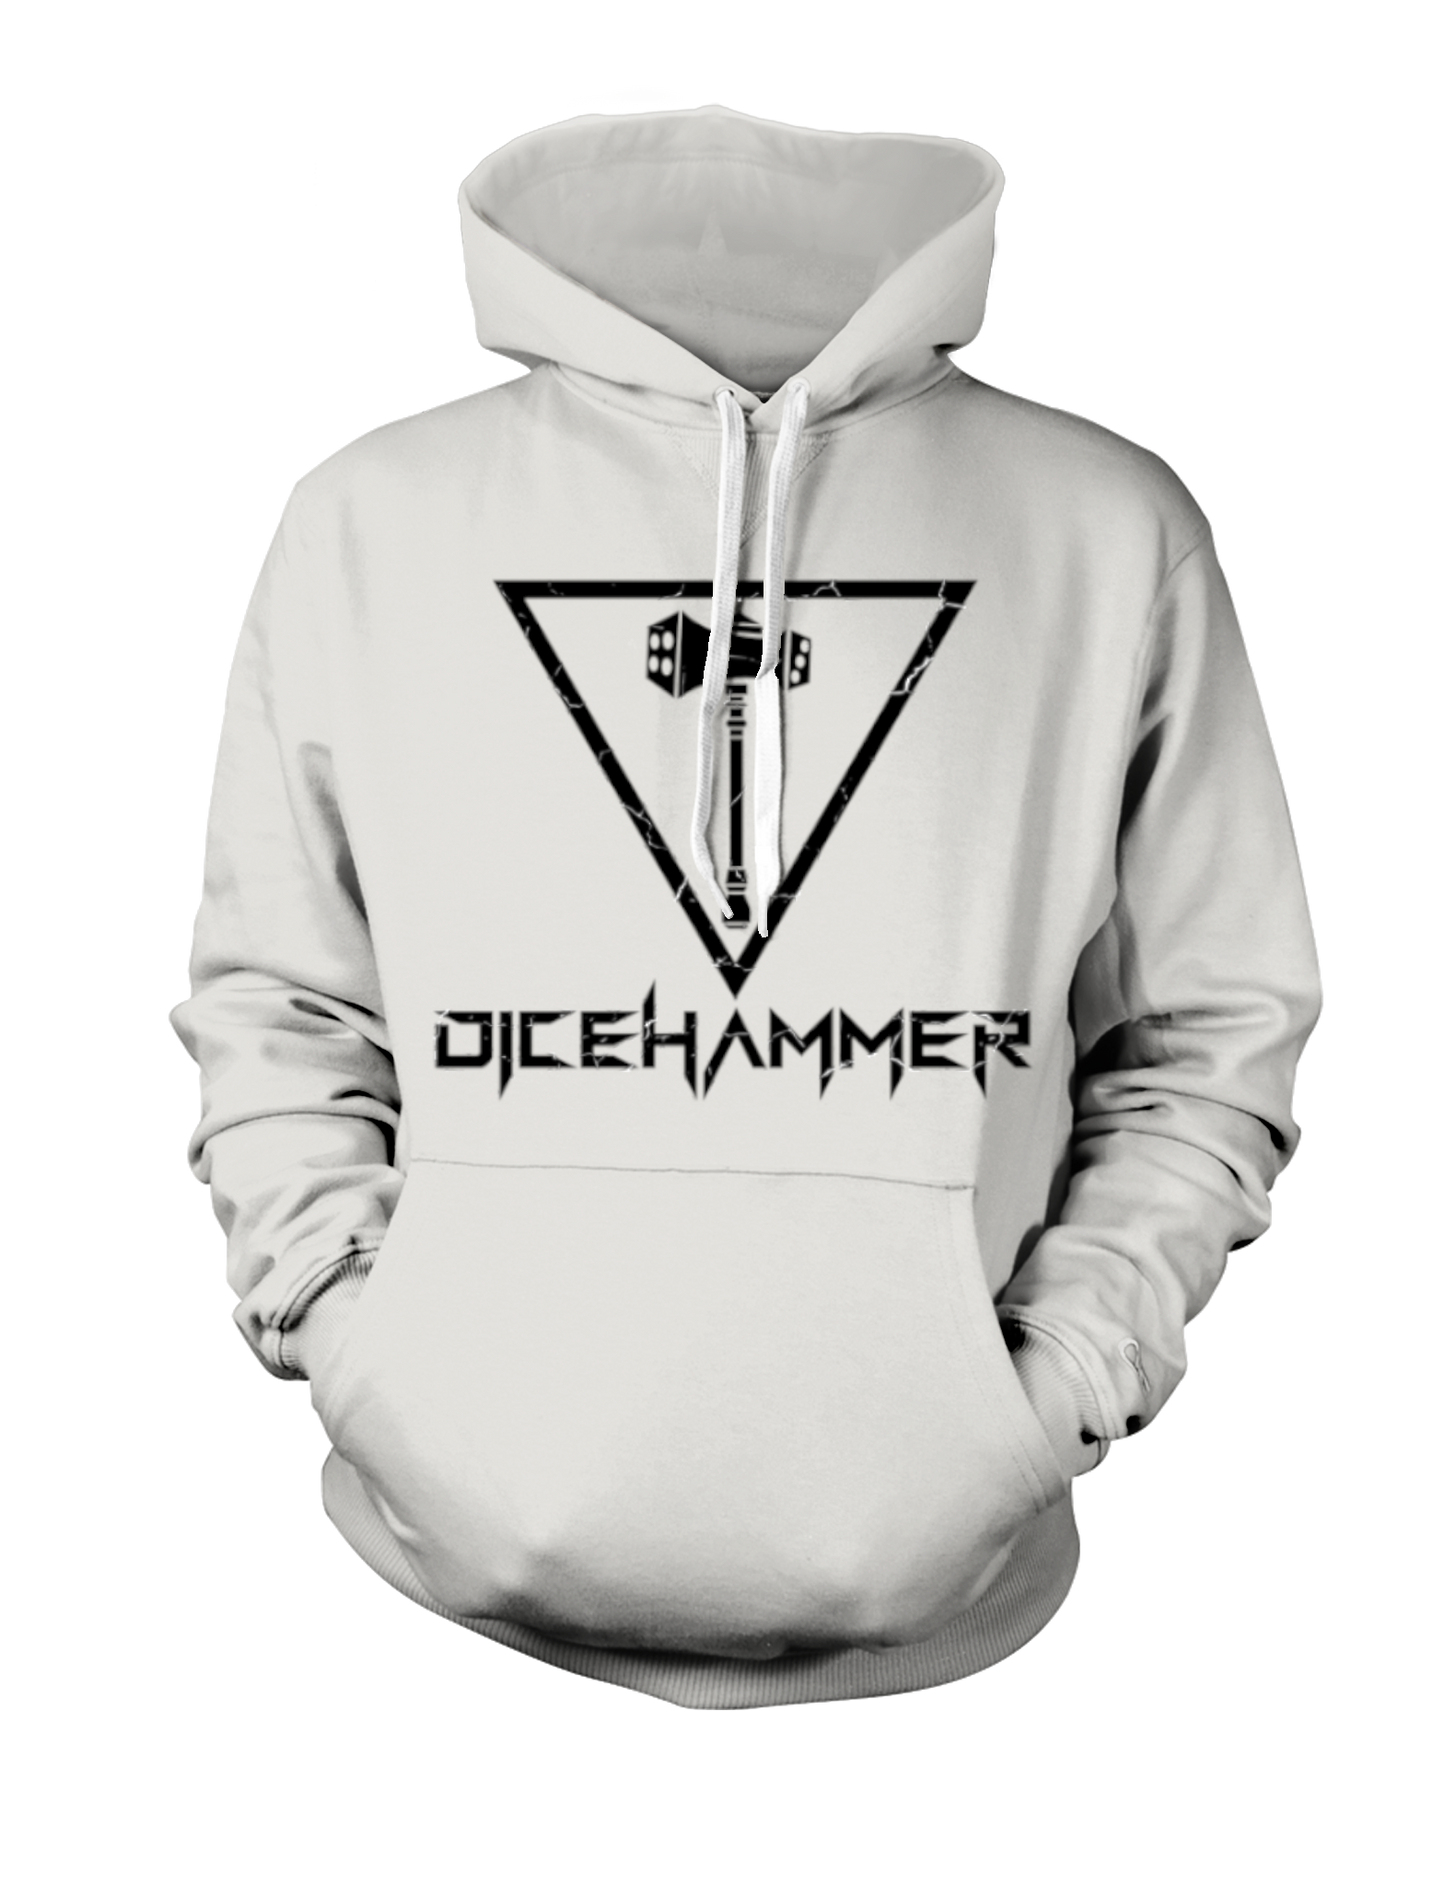 Dicehammer Triangle - Hoodie